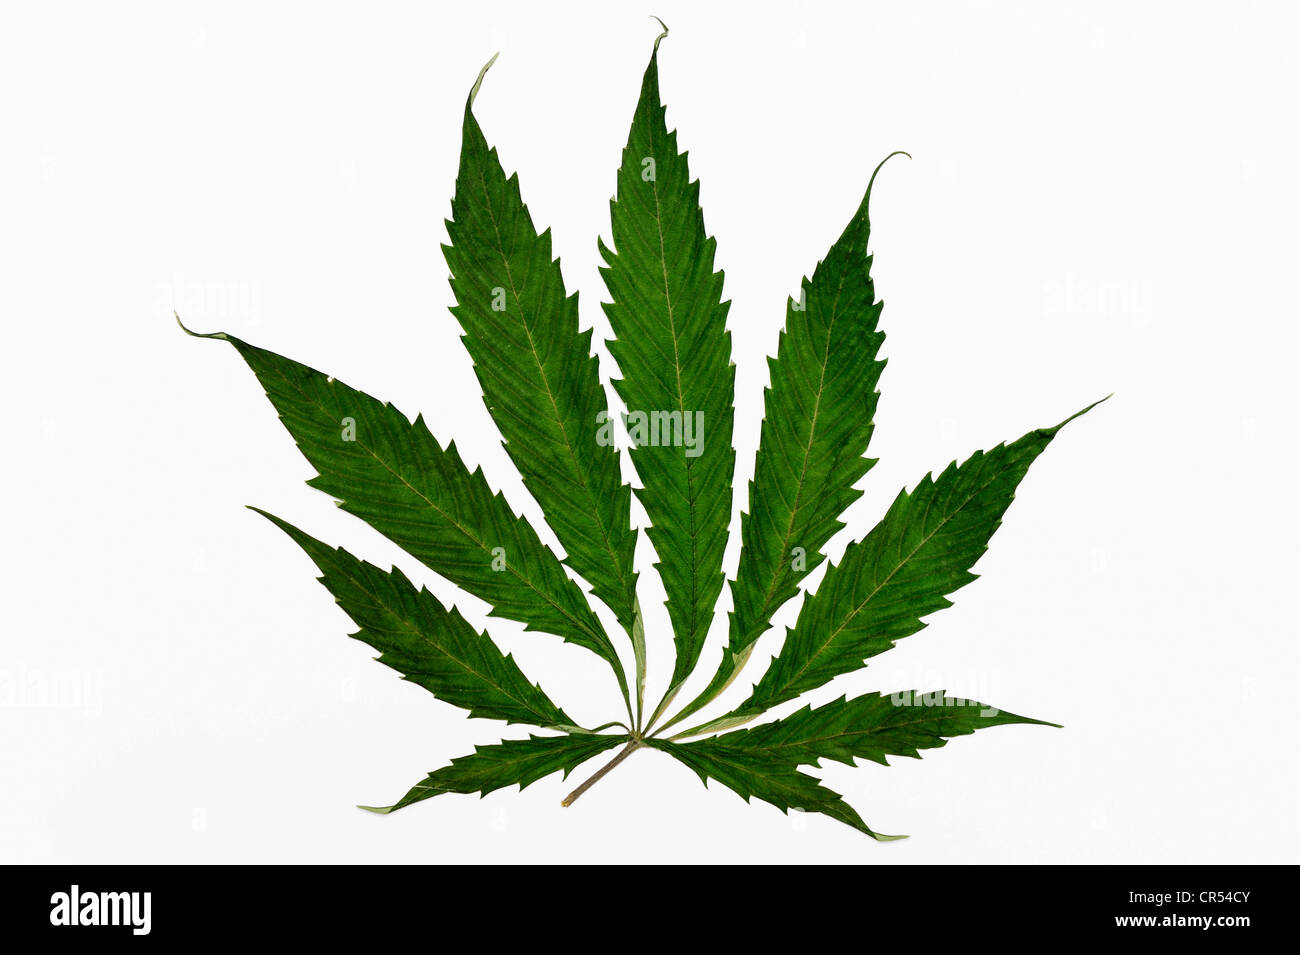 Cannabis leaf (Cannabis sativa), marijuana Stock Photo